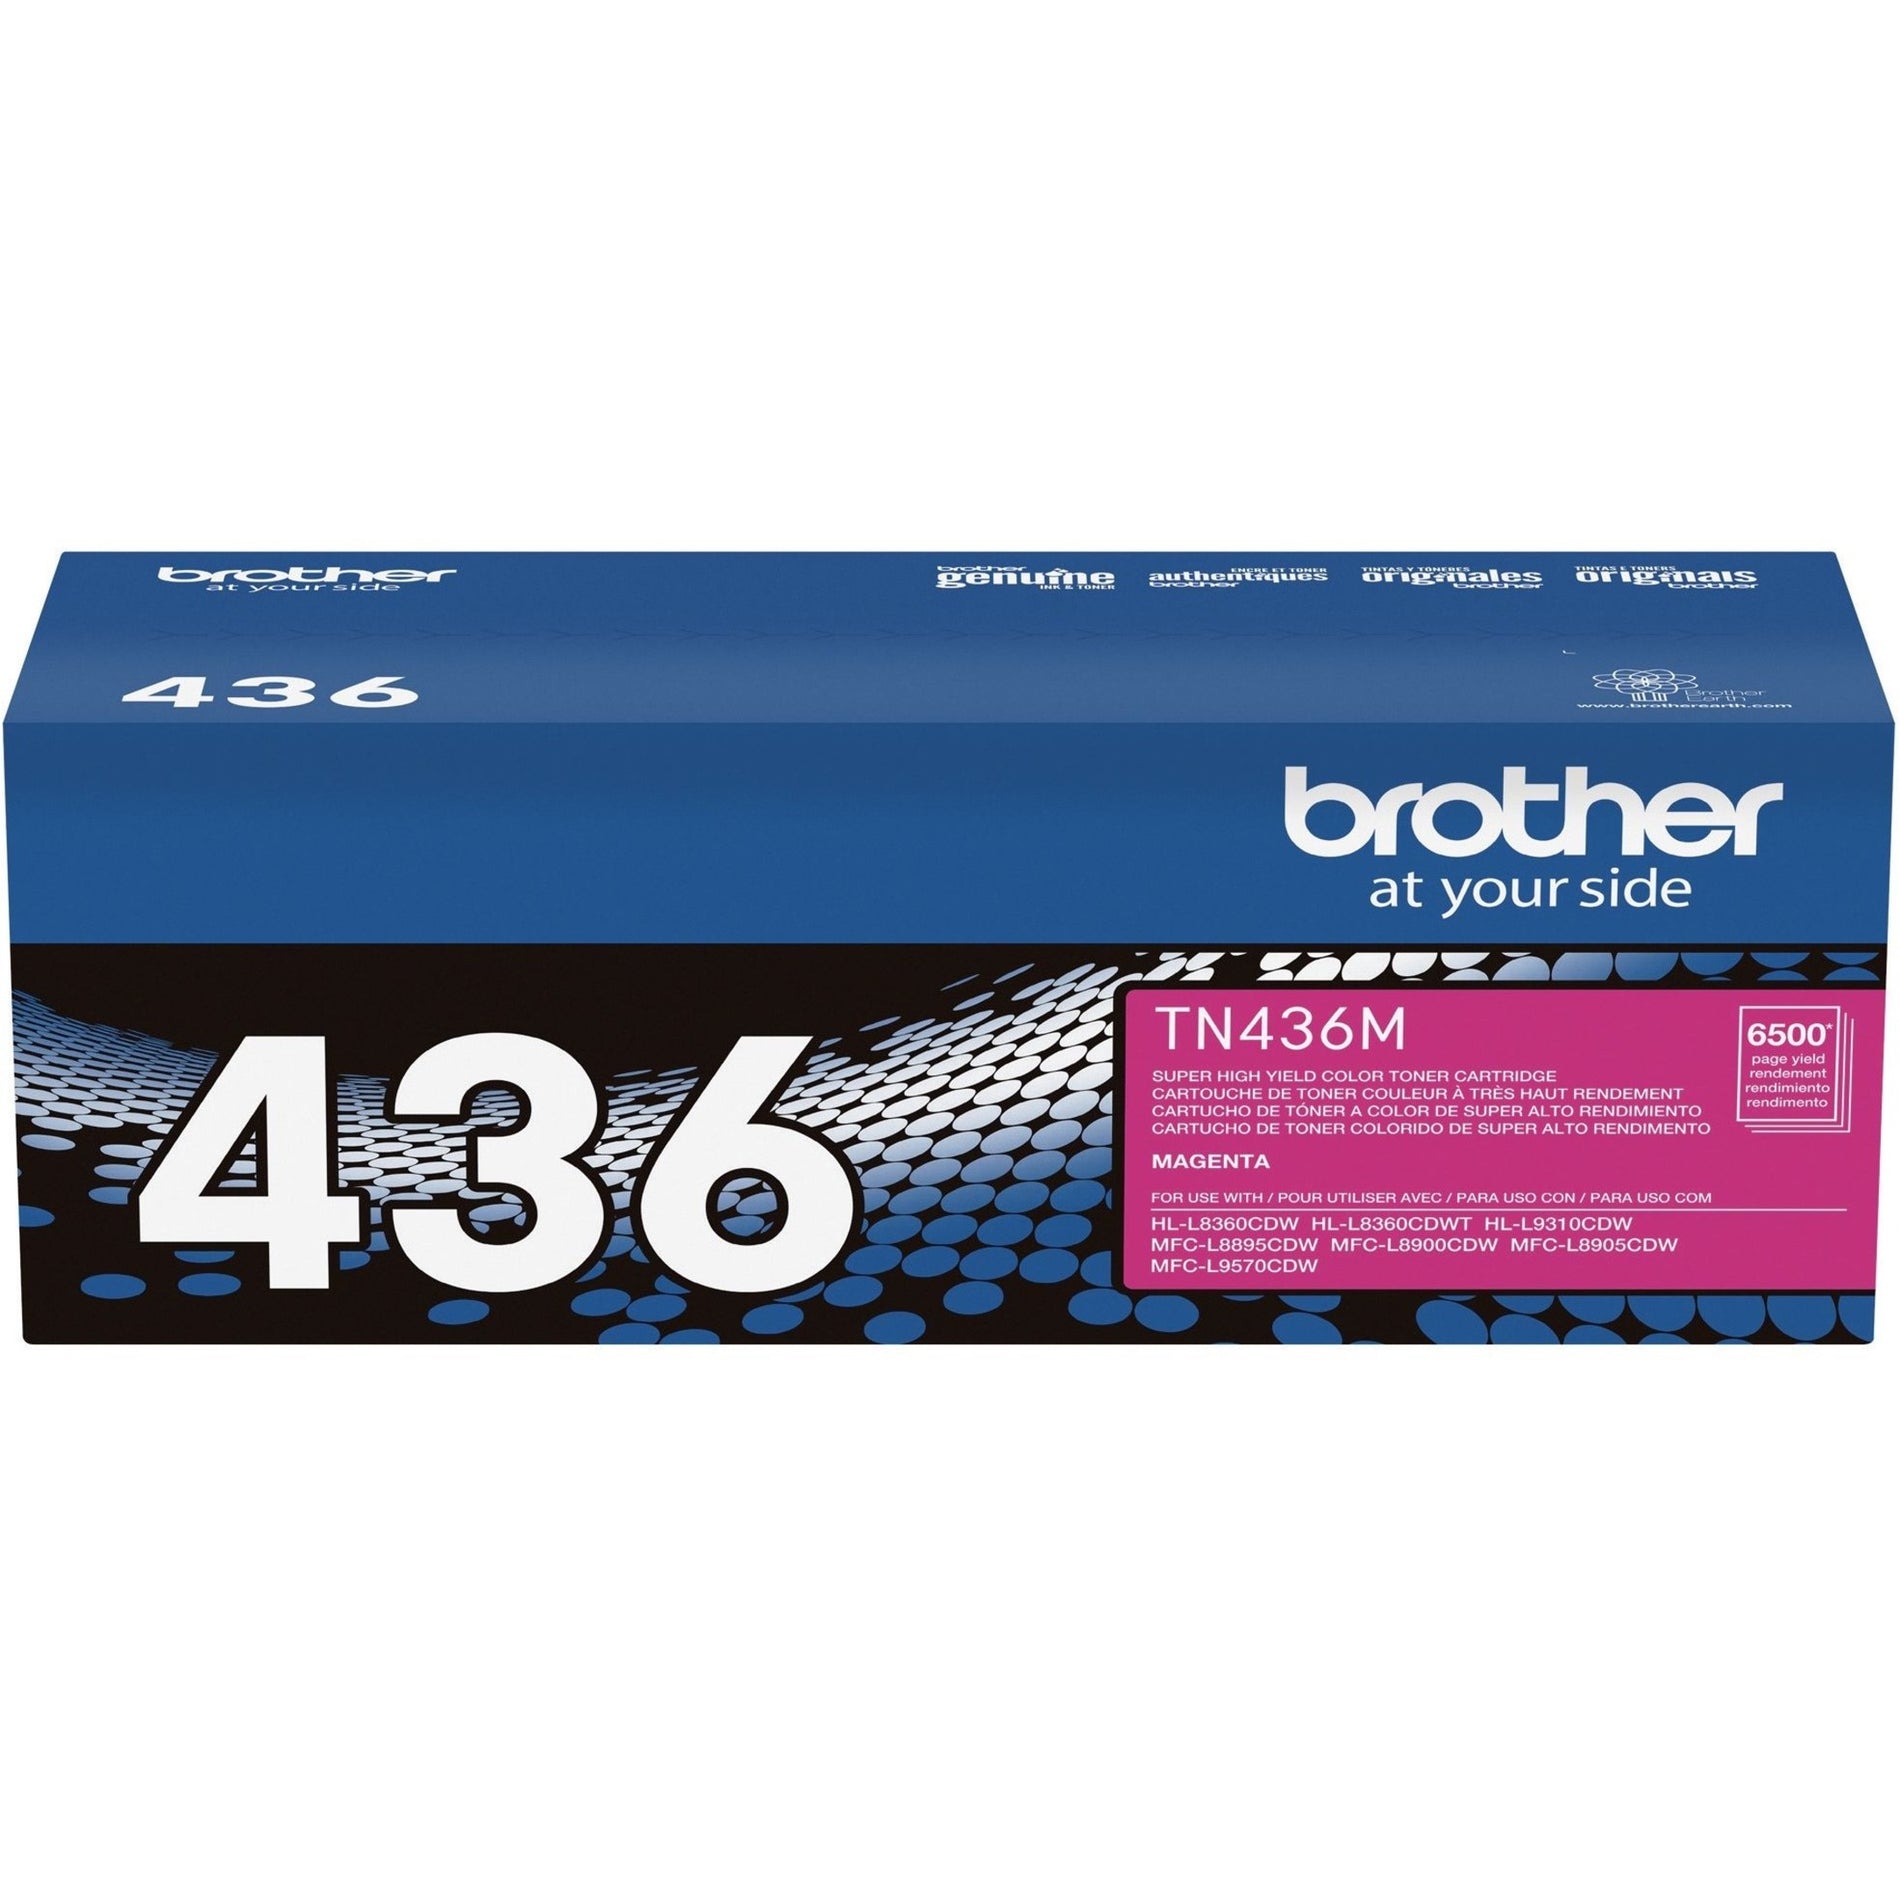 Brother TN436M Toner Cartridge - Magenta, Original Laser Toner Cartridge - 6500 Pages